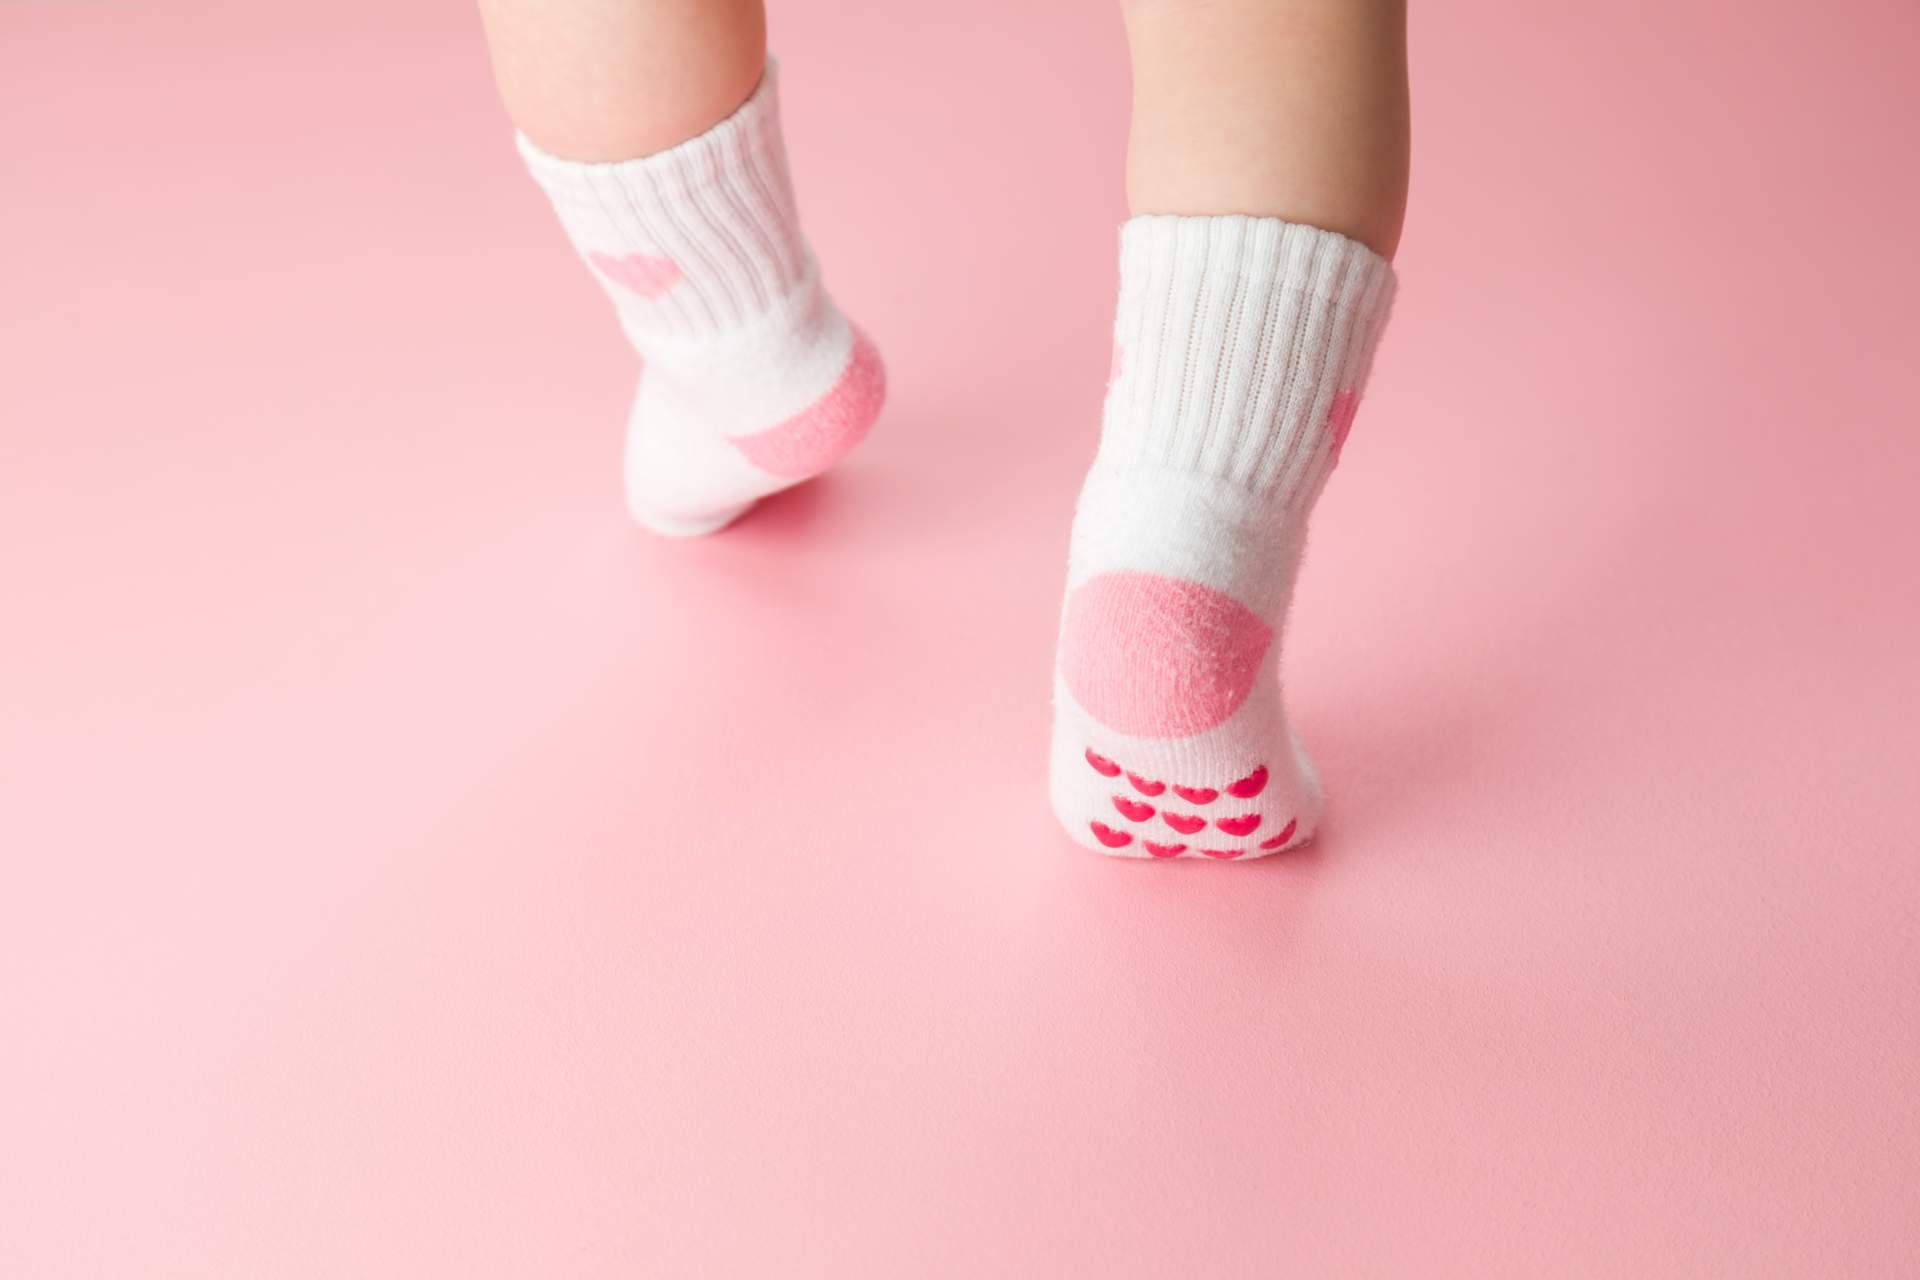 Lässig Calcetines Antideslizantes Pink - Calzado Barefoot